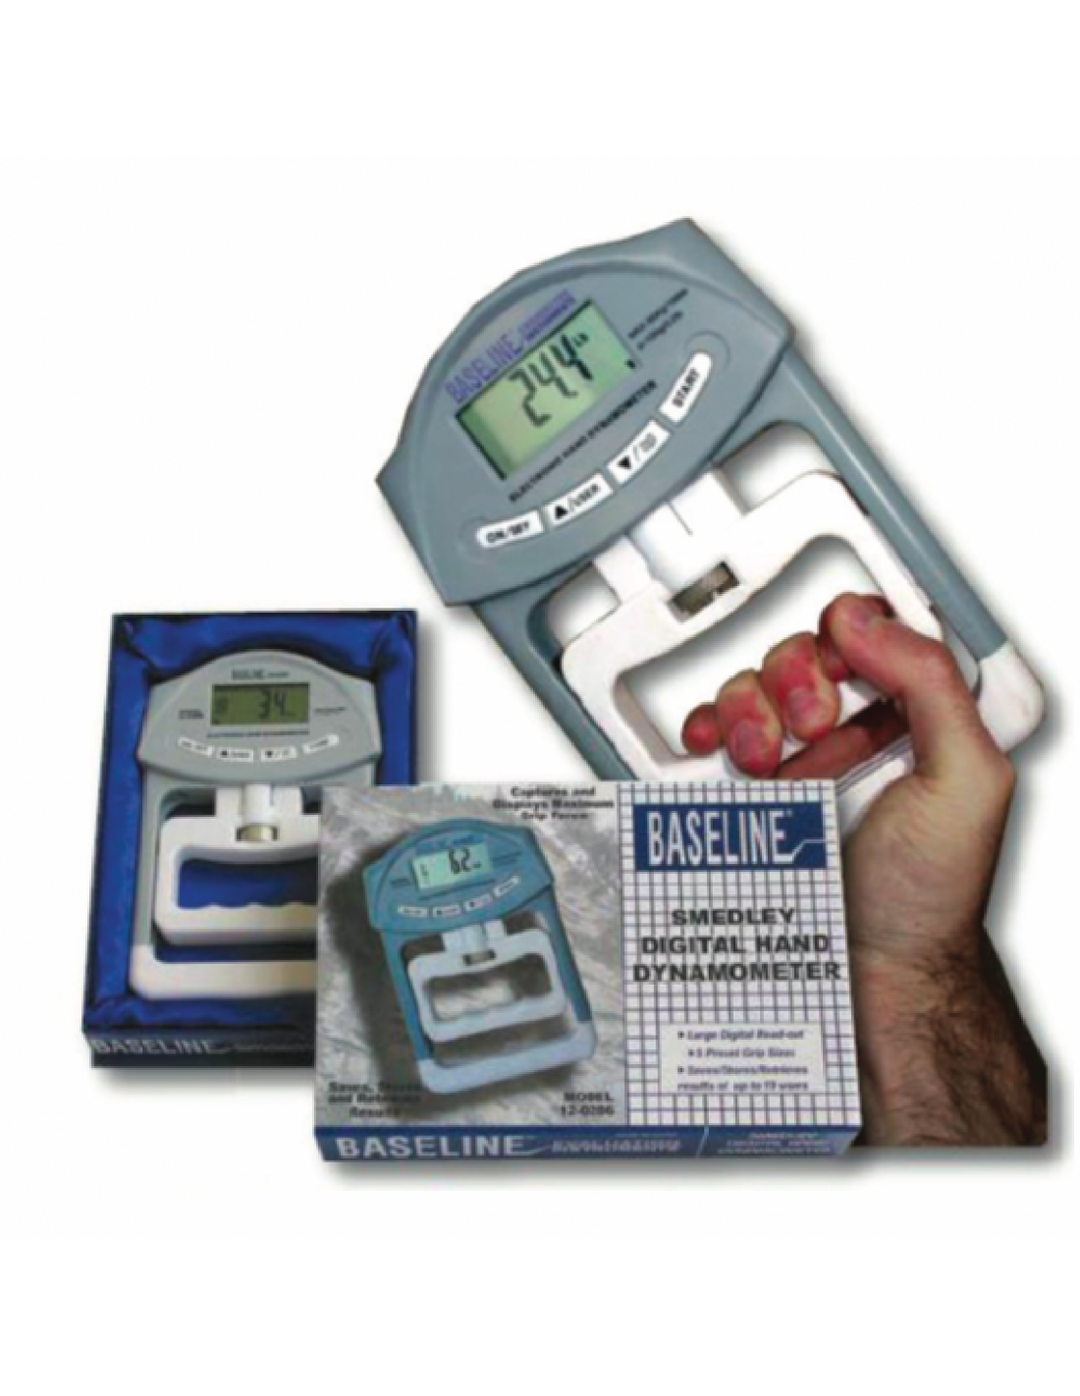 Baseline® Digital Smedley Dynamometer